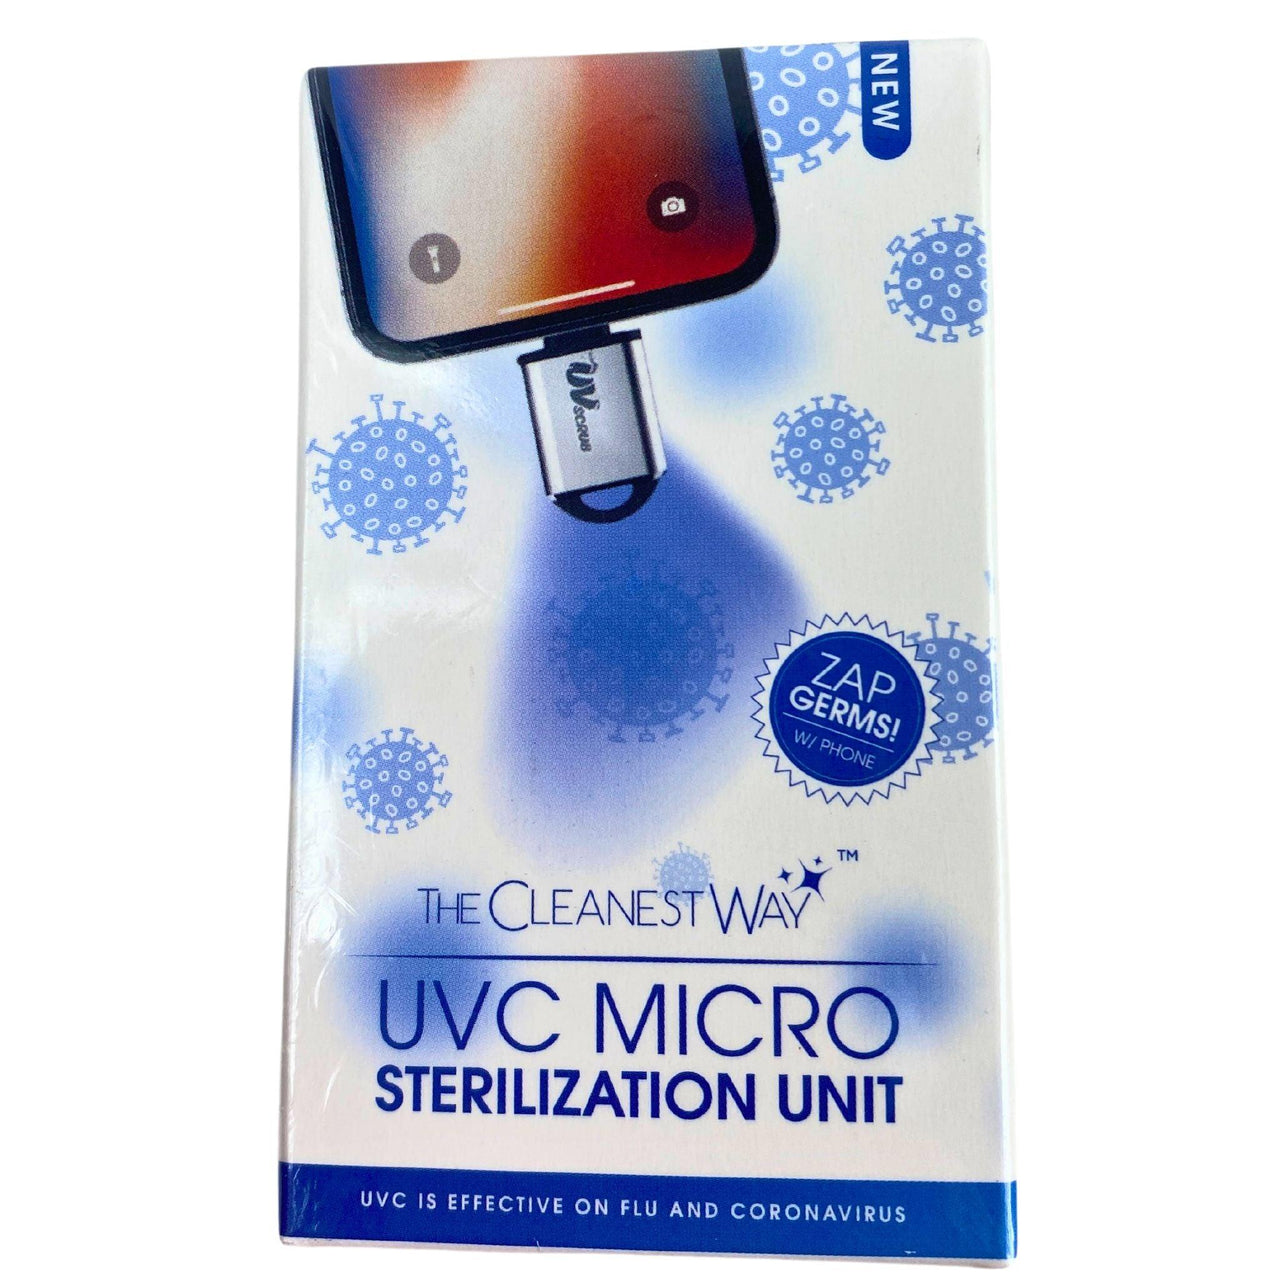 The Cleanest Way Uvc Micro Sterilization Unit Zap Germs W/ Phone (35 Pcs Lot) - Discount Wholesalers Inc